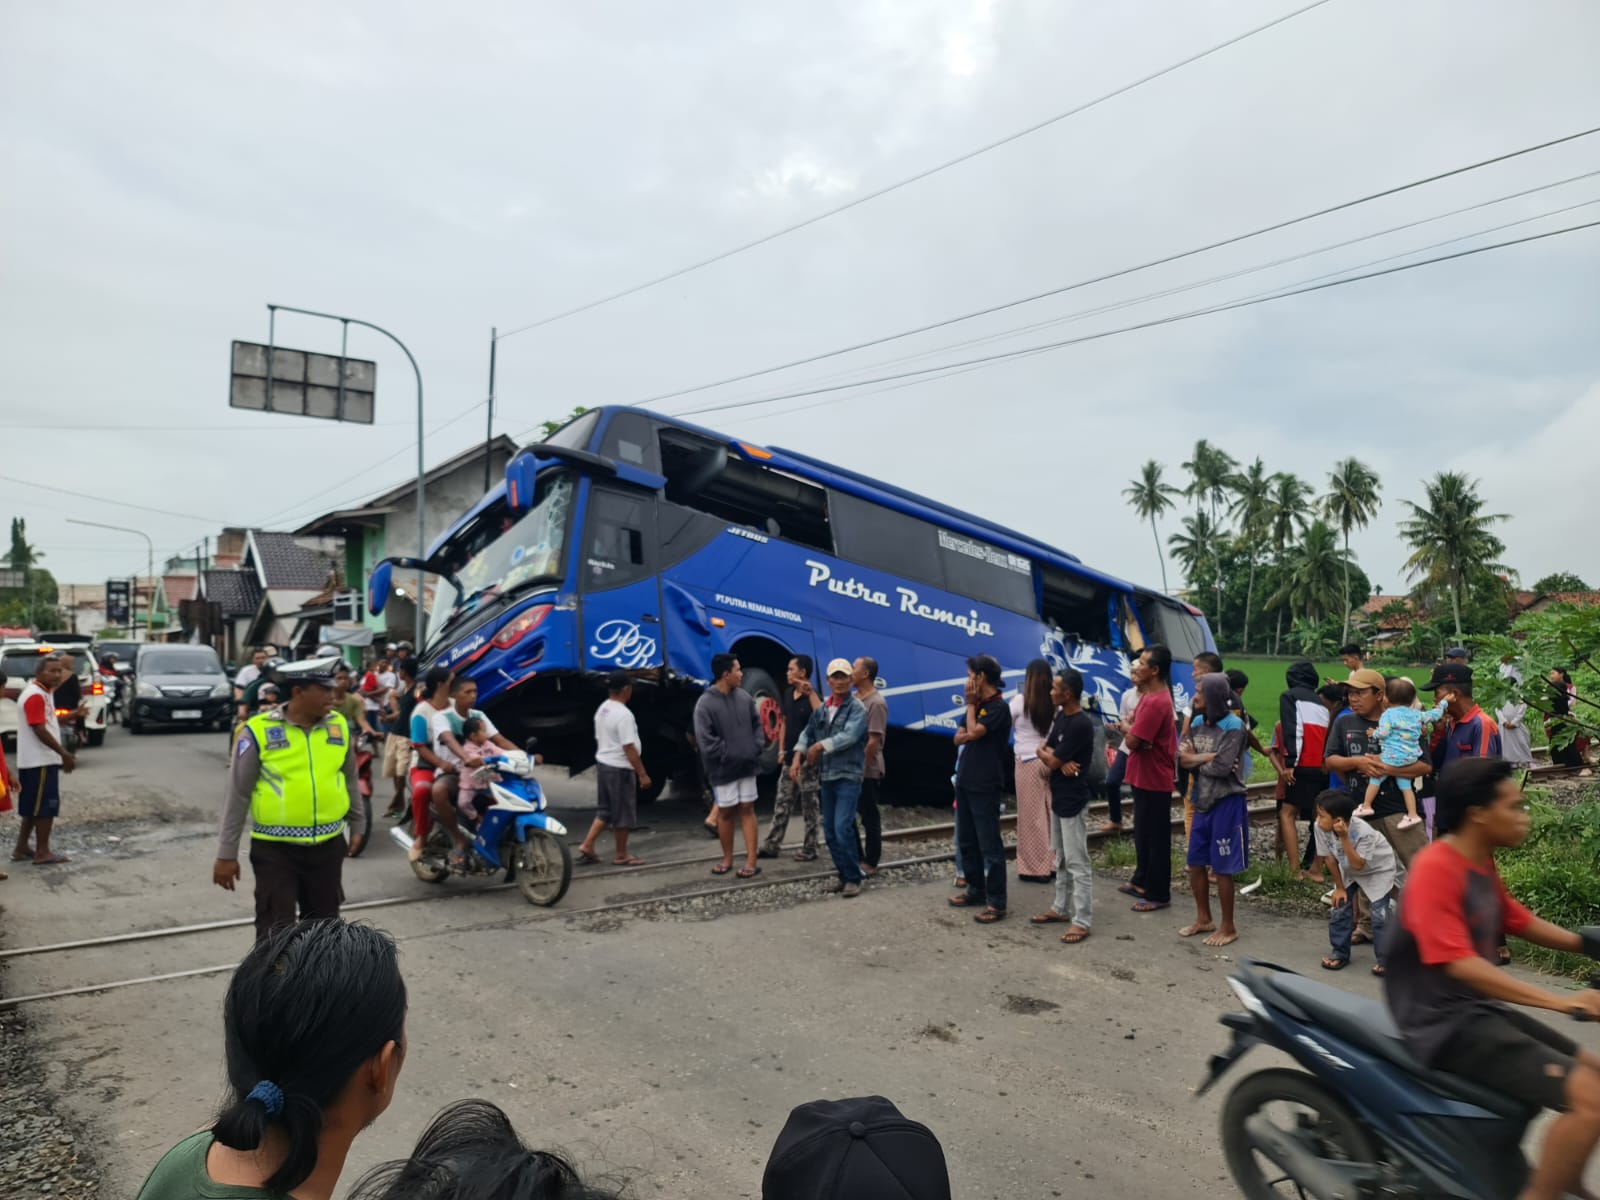  Bus Putra Remaja vs Kereta Api Babaranjang, Beruntung Tanpa Korban Jiwa